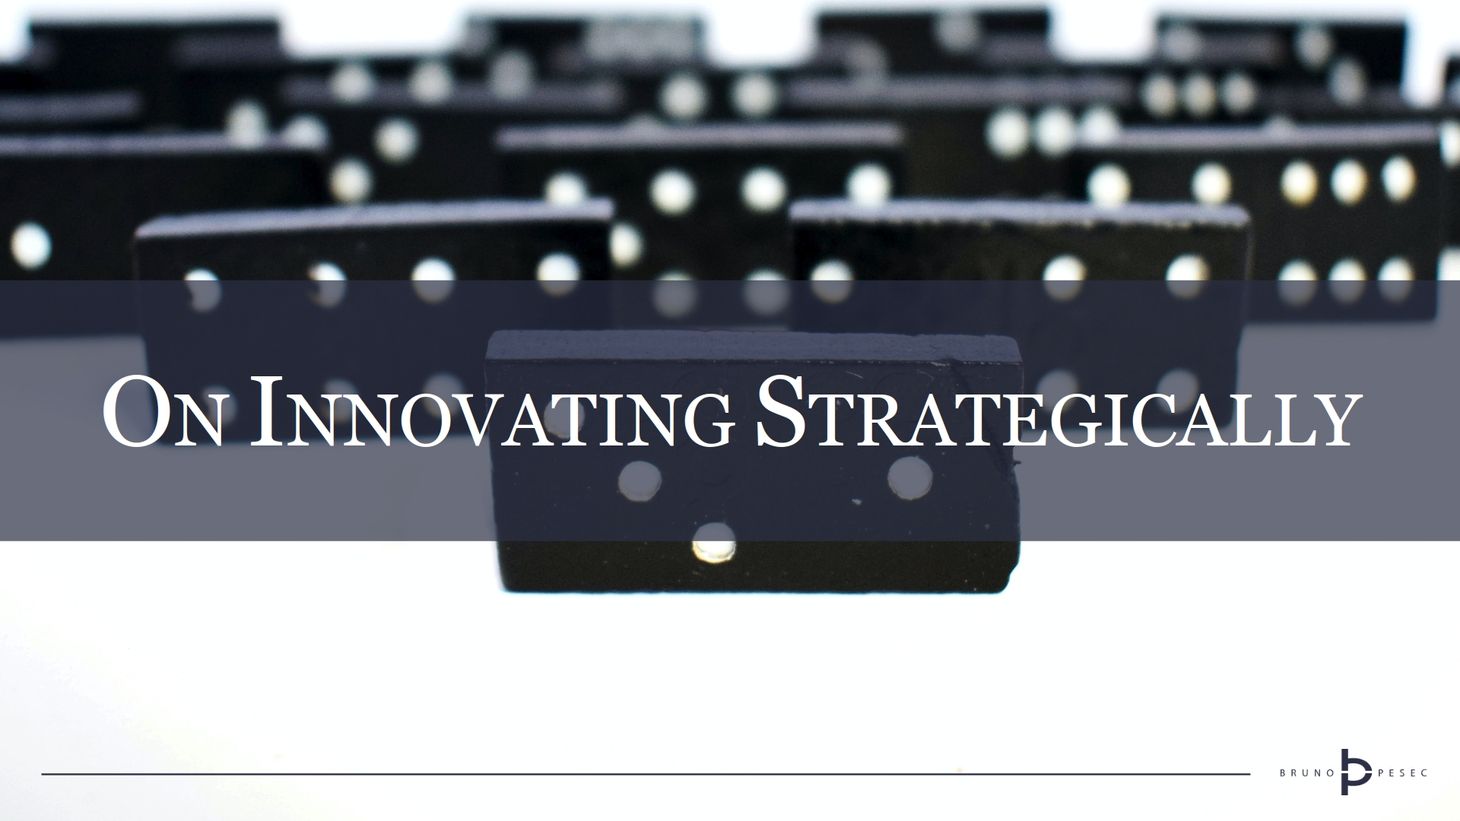 On innovating strategically